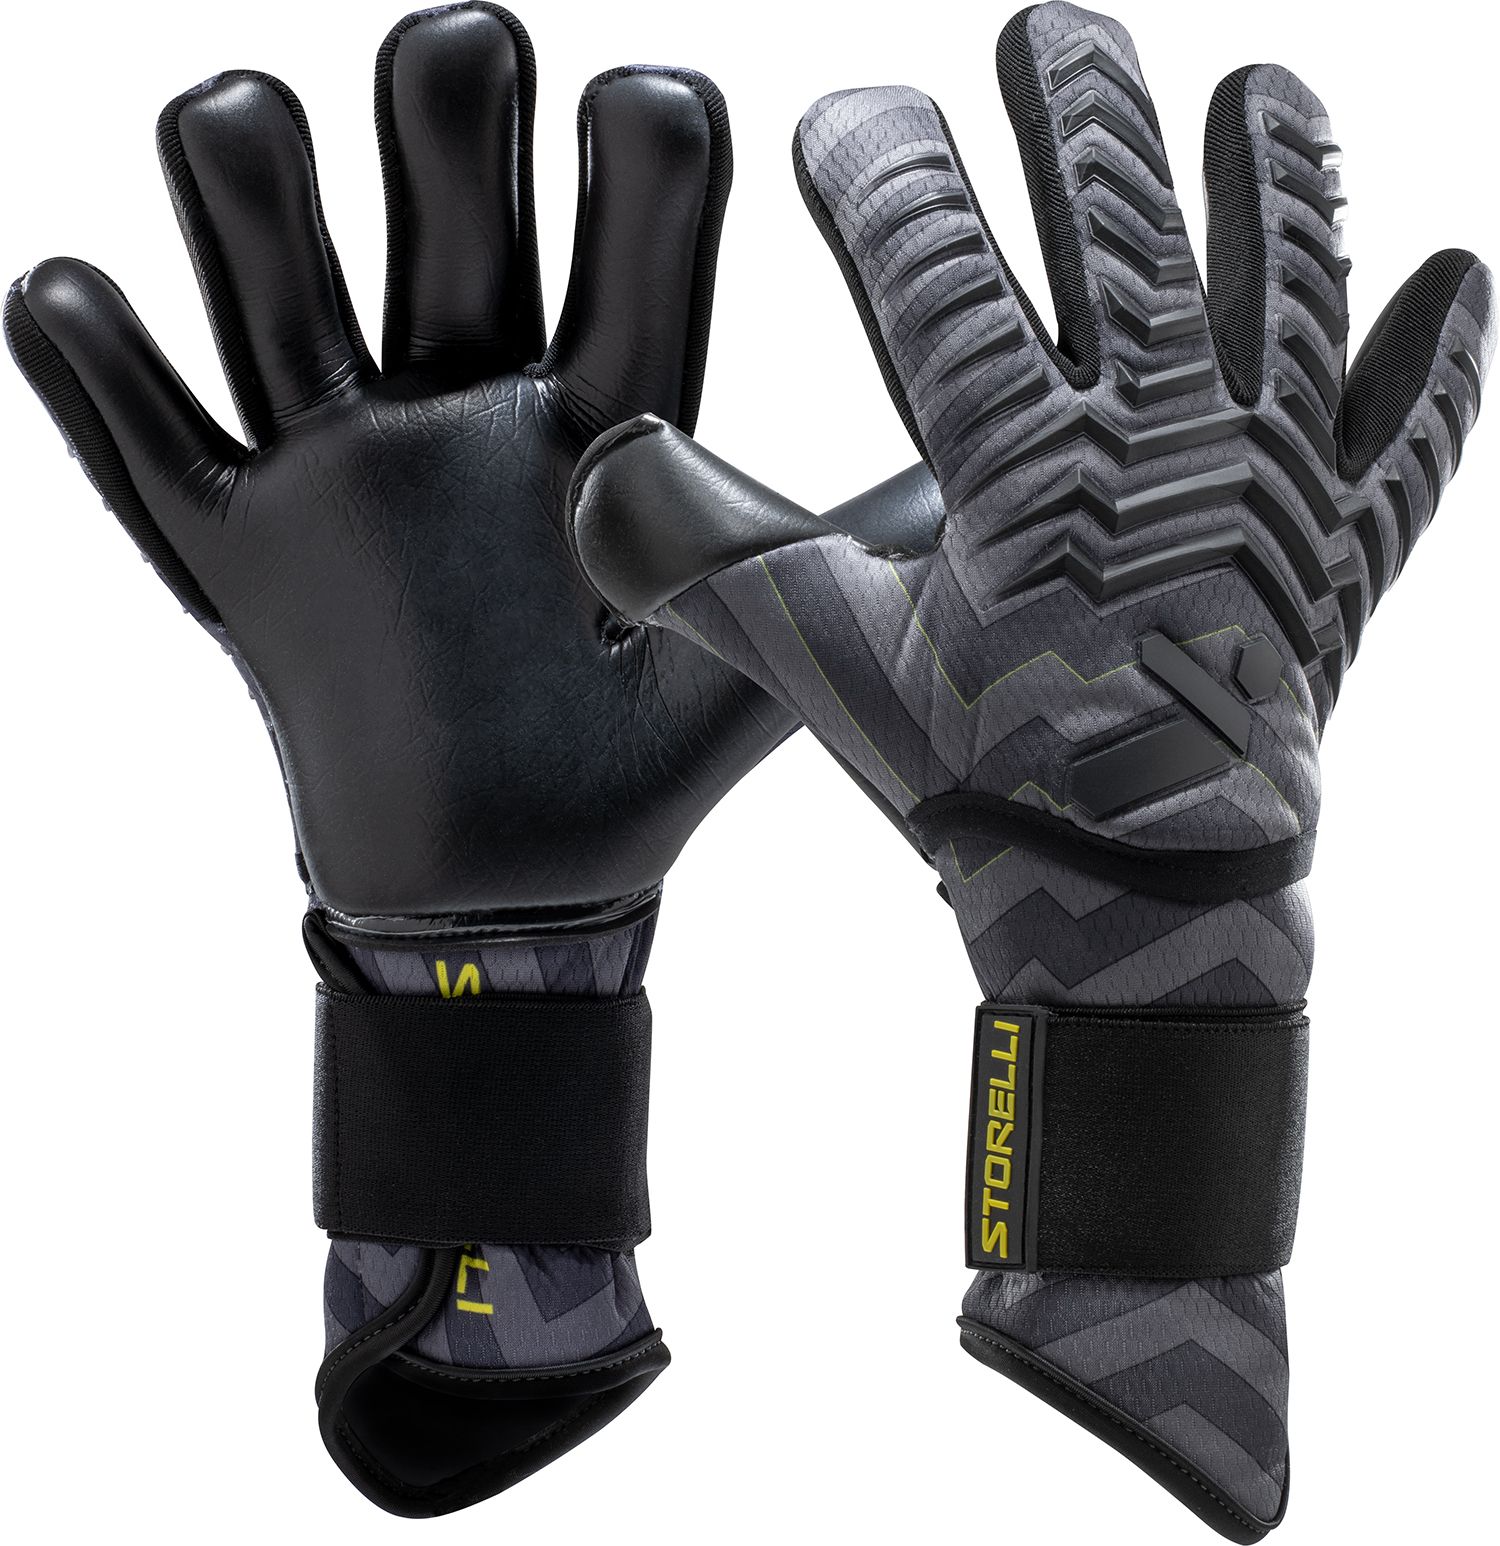 Storelli Electric Goalkeeper Gloves